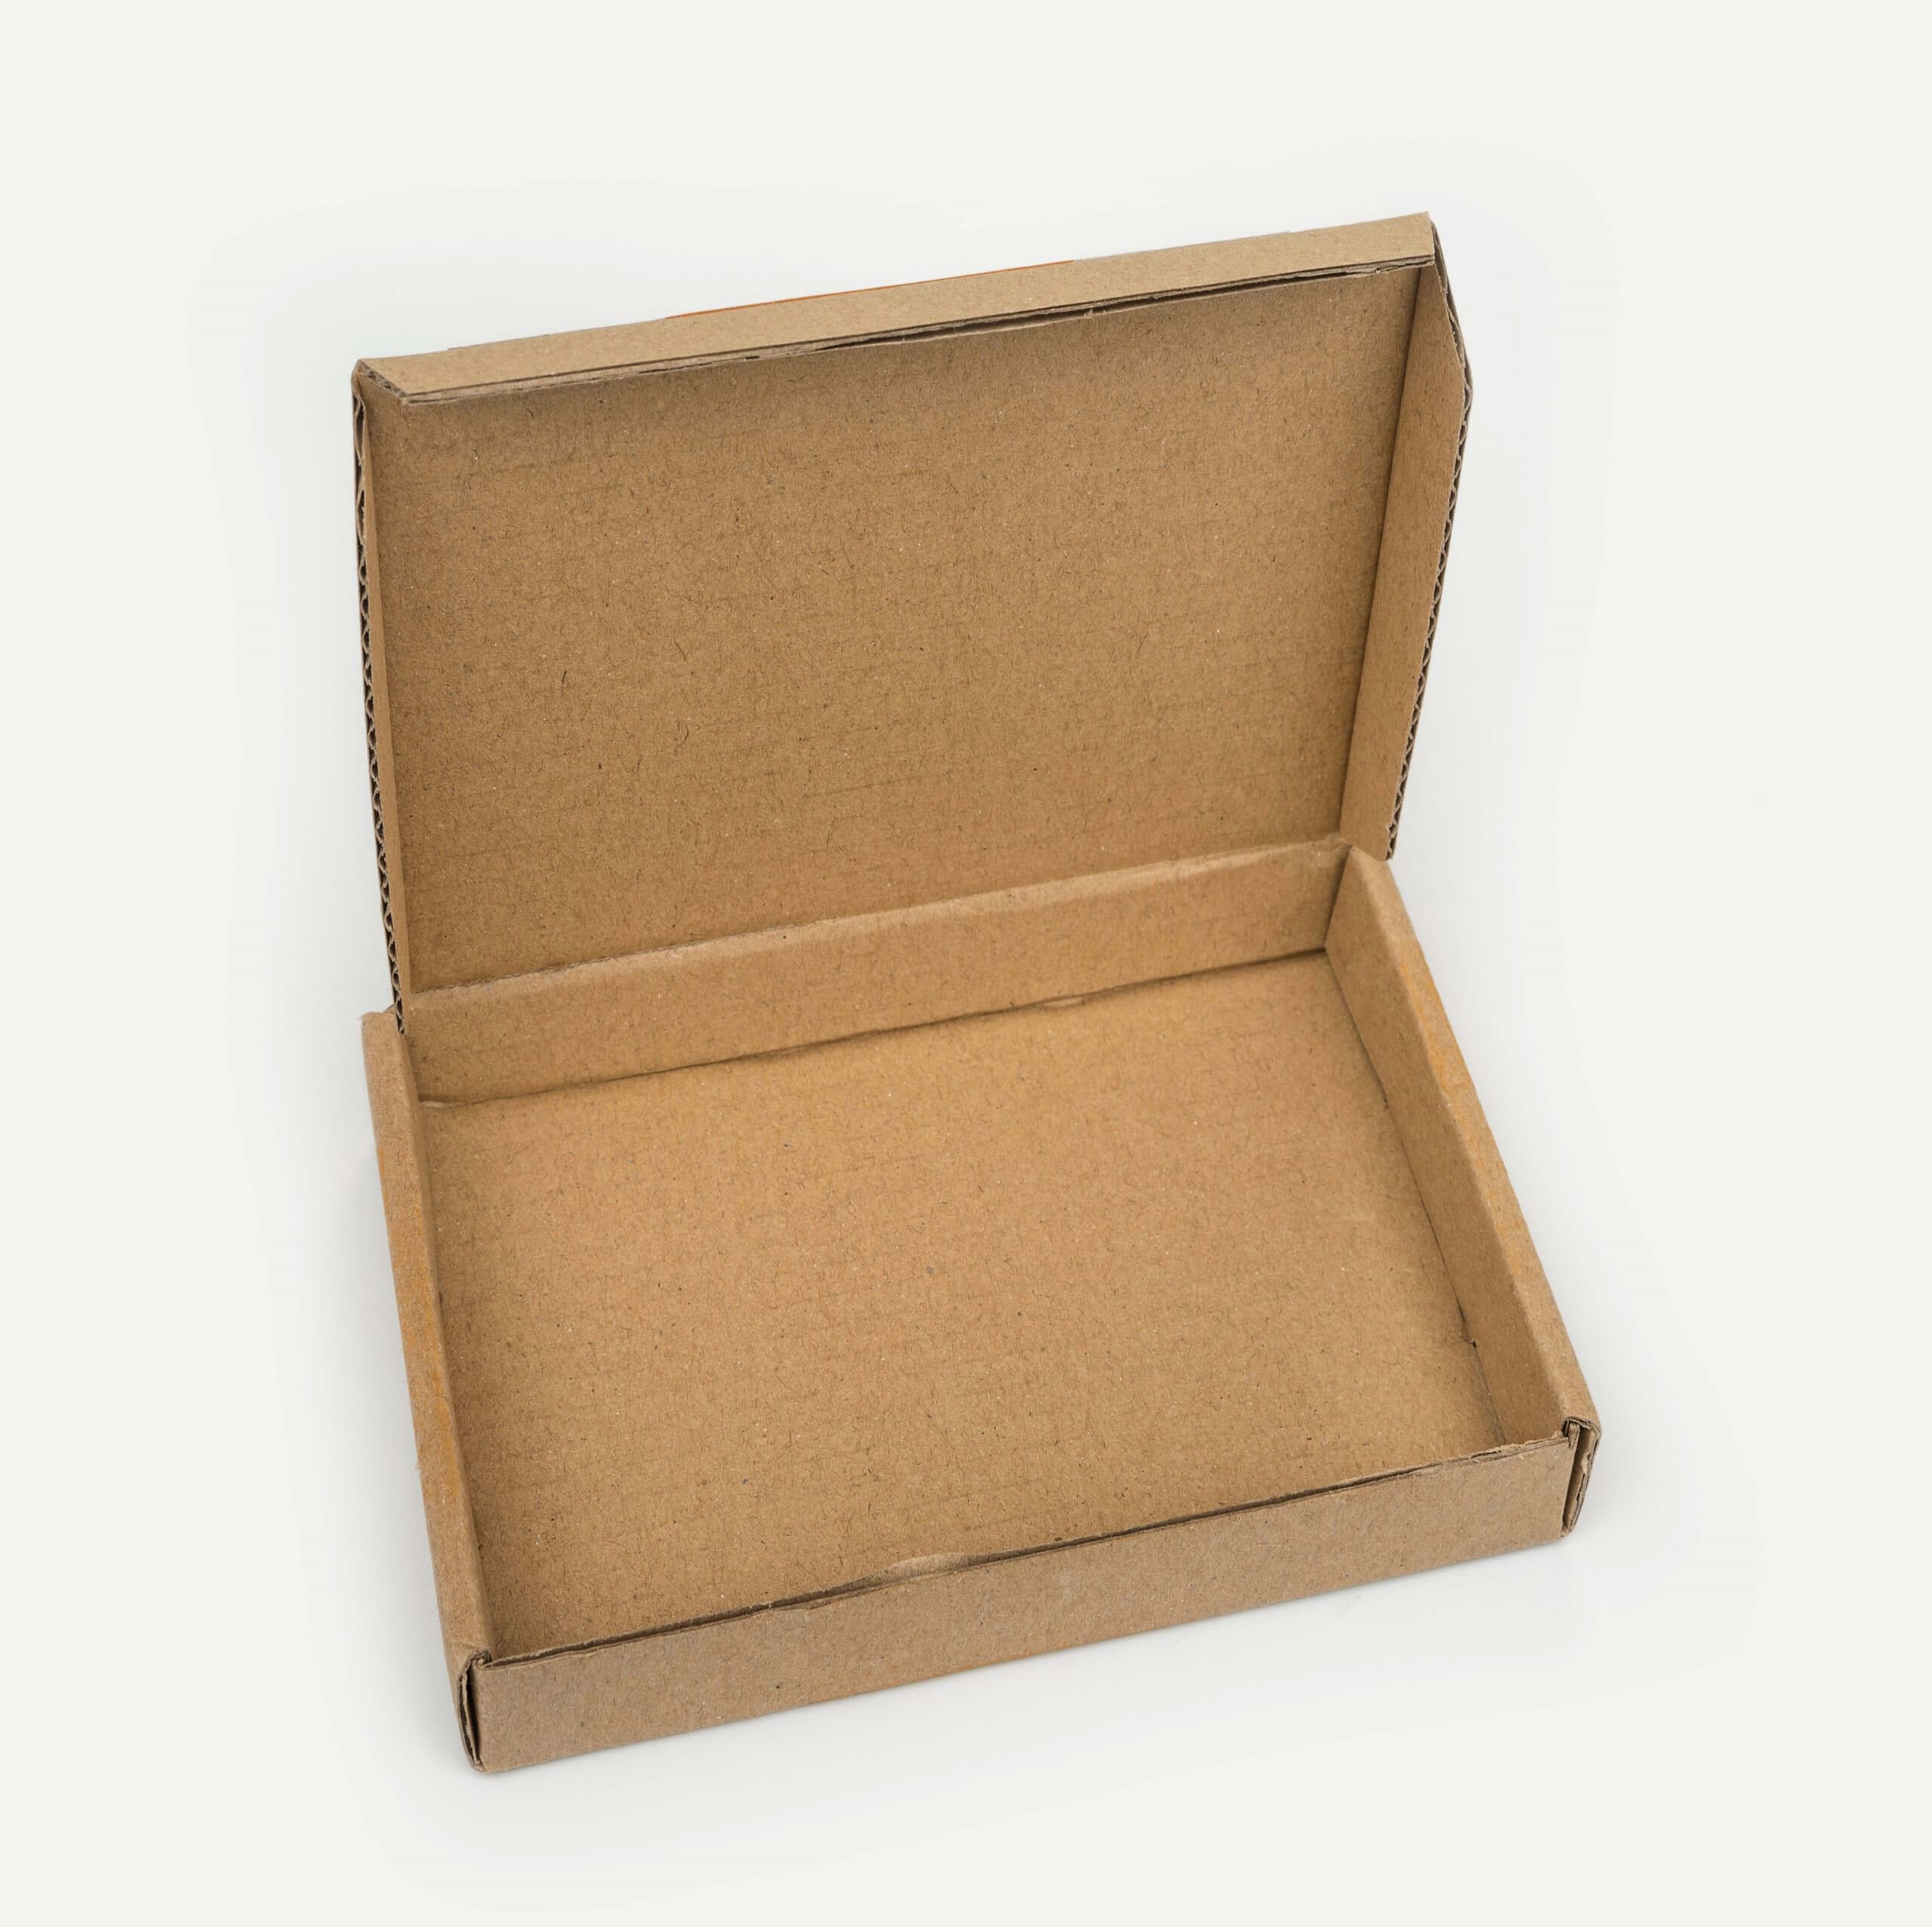 An image of a cardboard book wrap postal box.